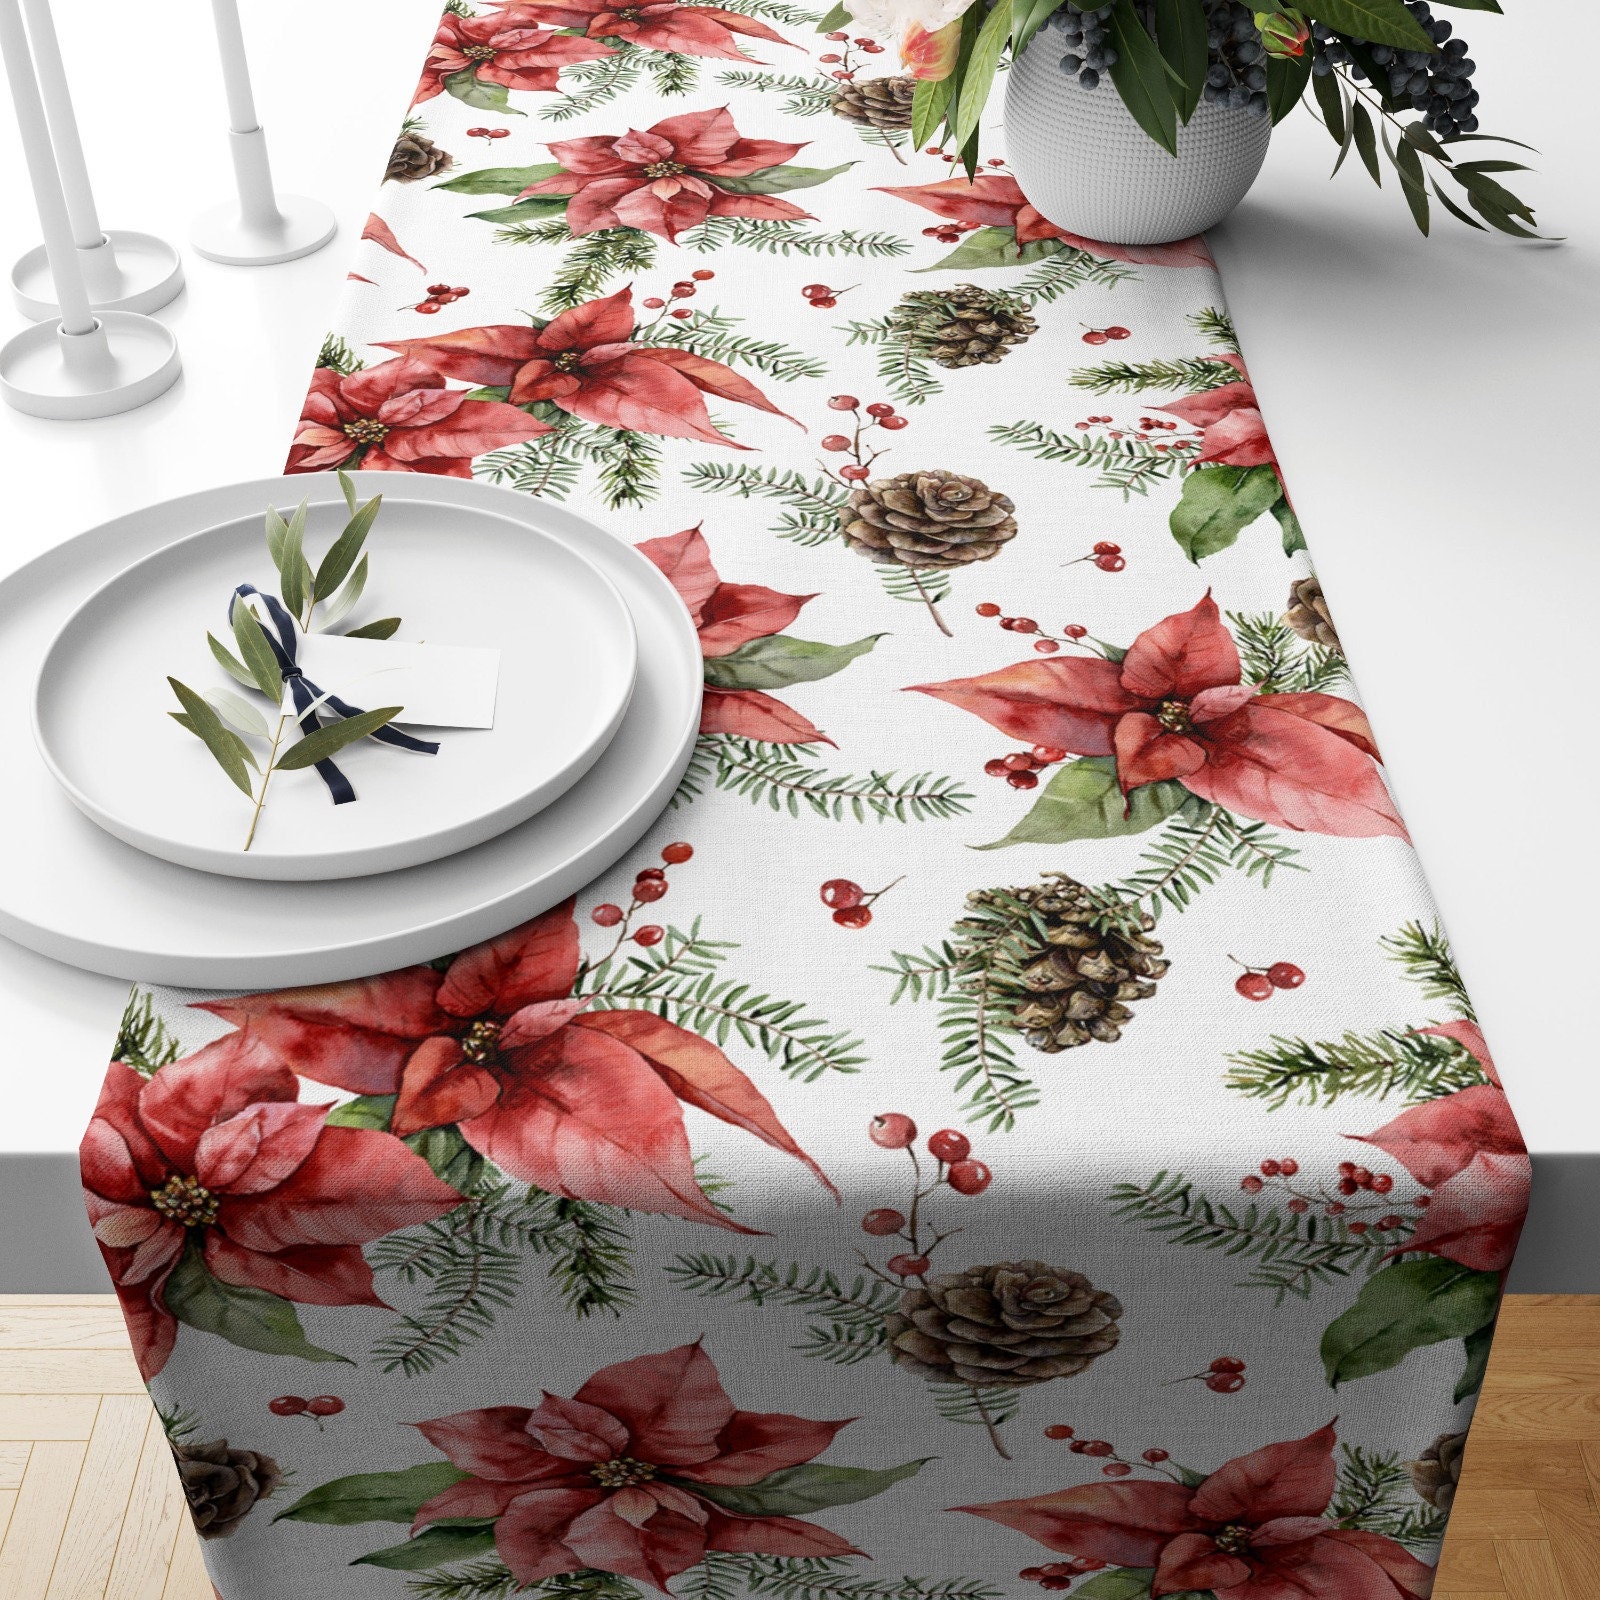 21sandwhick Christmas Table Runner 270cm Snowflake Christmas Tree Print Table Runner Kitchen Decorative Tablecloth Beige White #Christmas Tree 